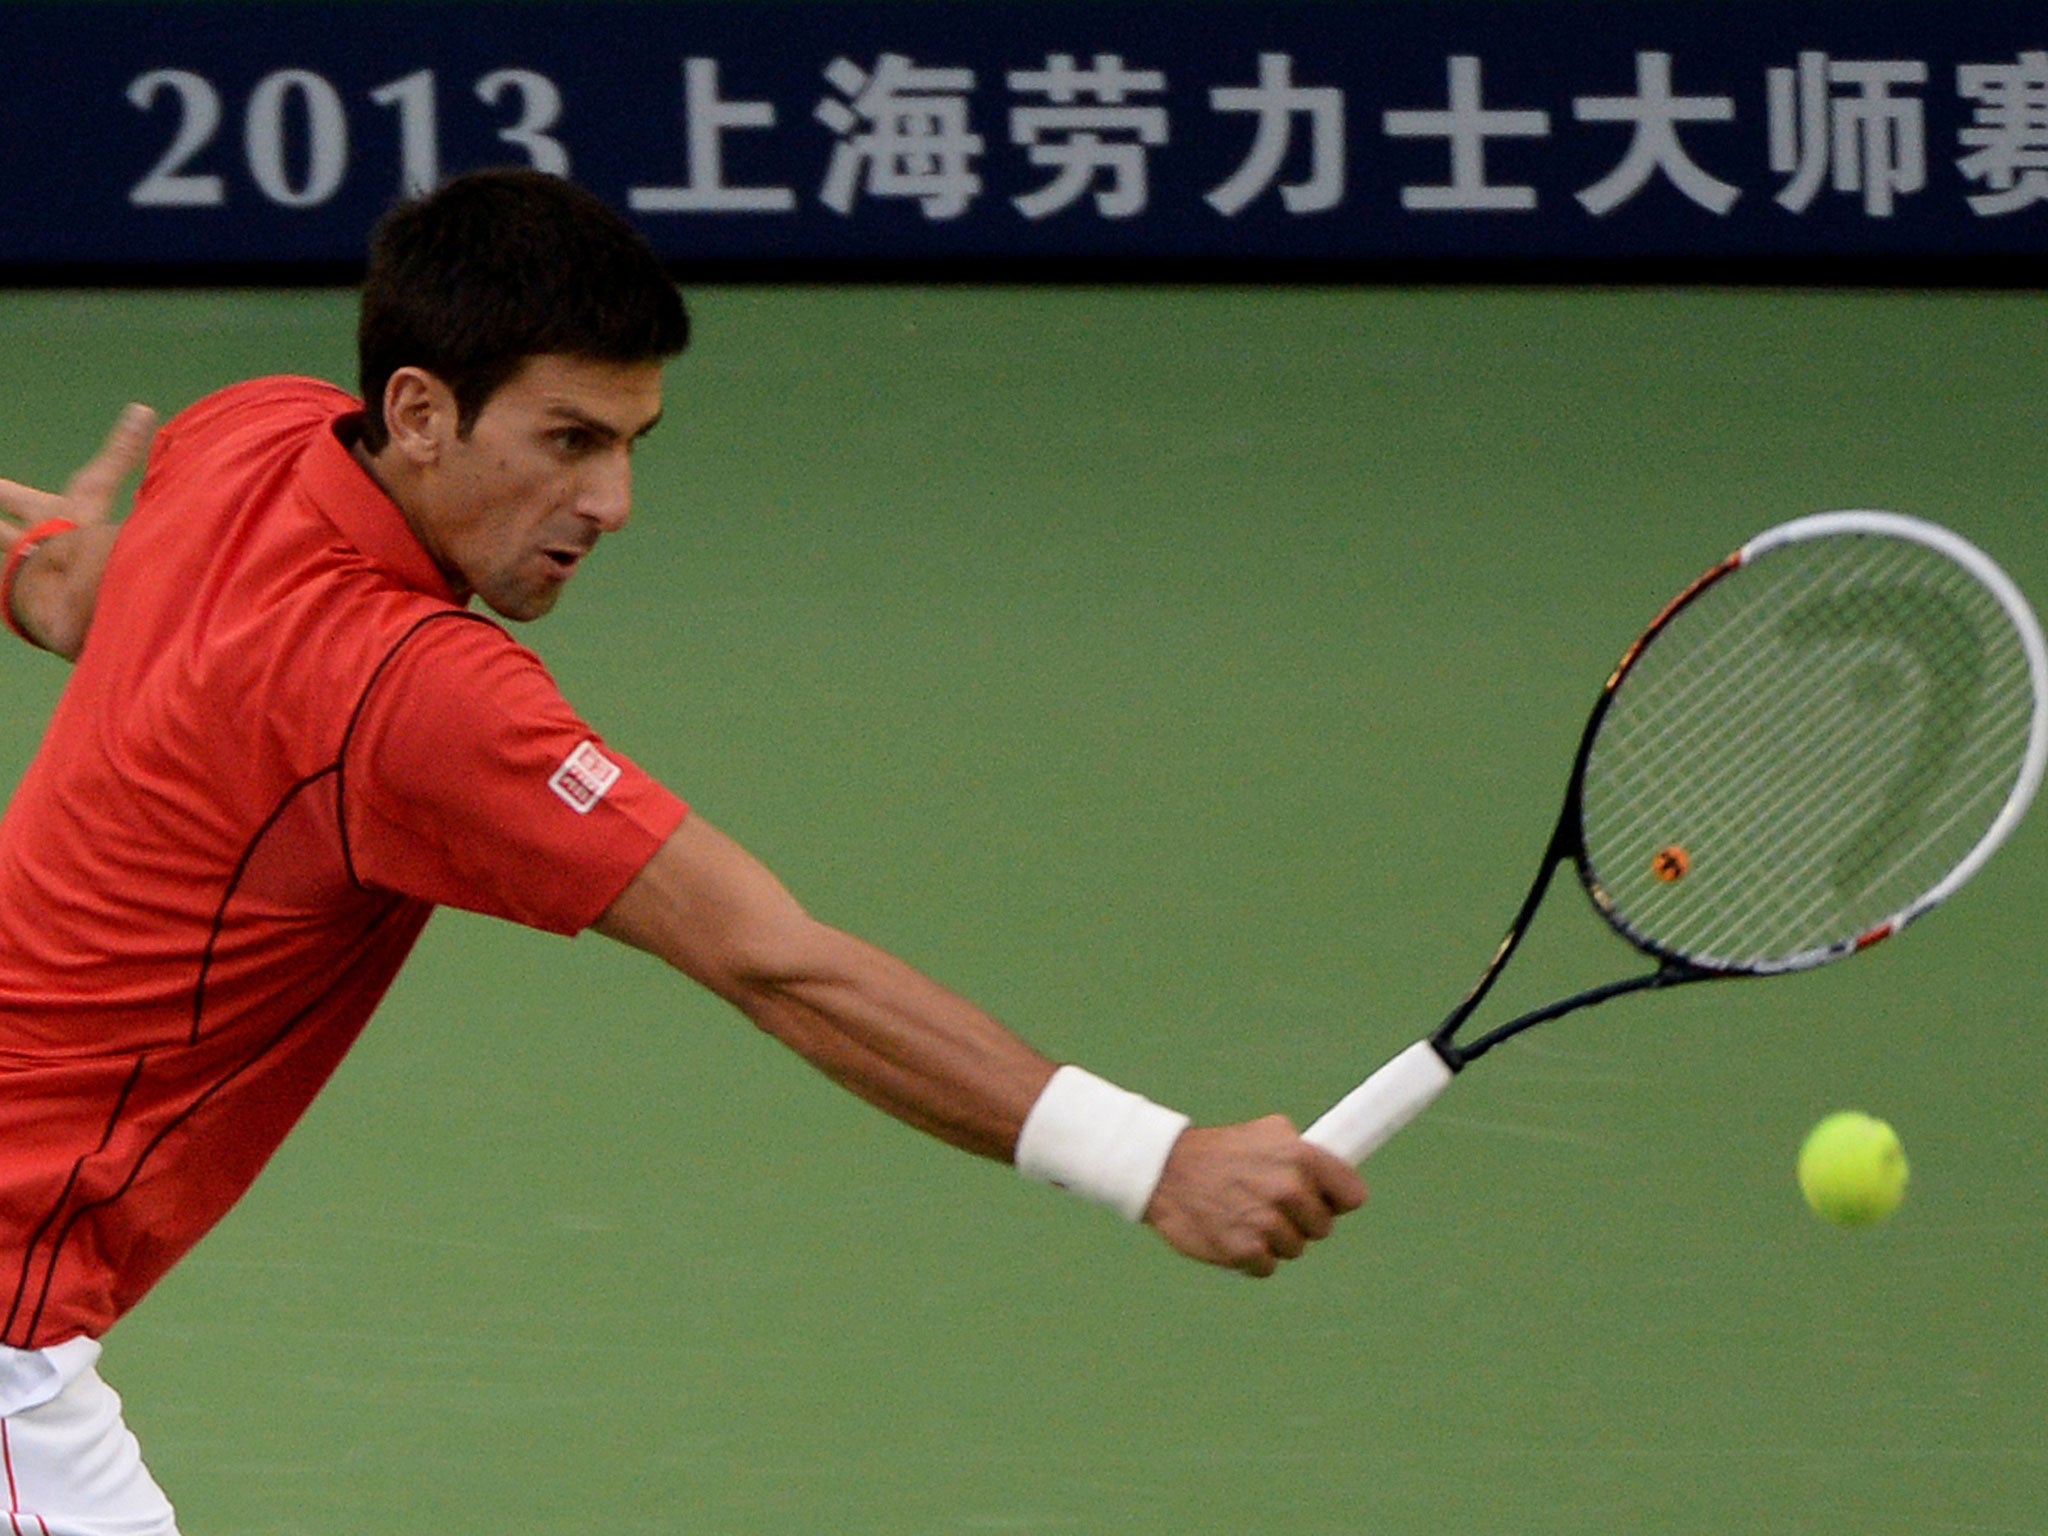 Novak Djokovic retained his Shanghai Masters title by beating Juan Martin del Potro